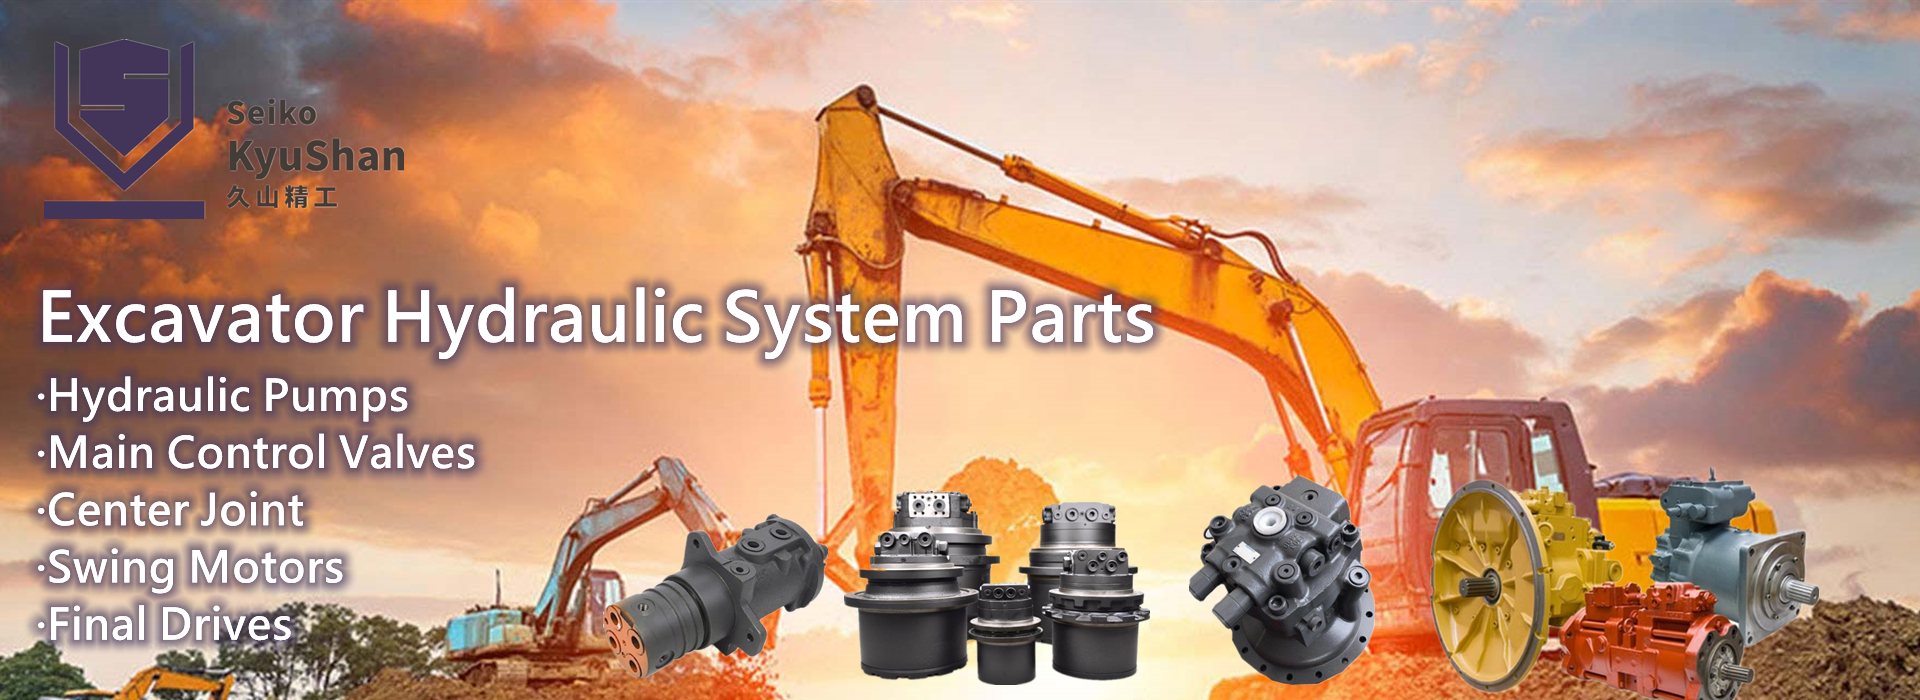 Excavator Hydraulic System Parts